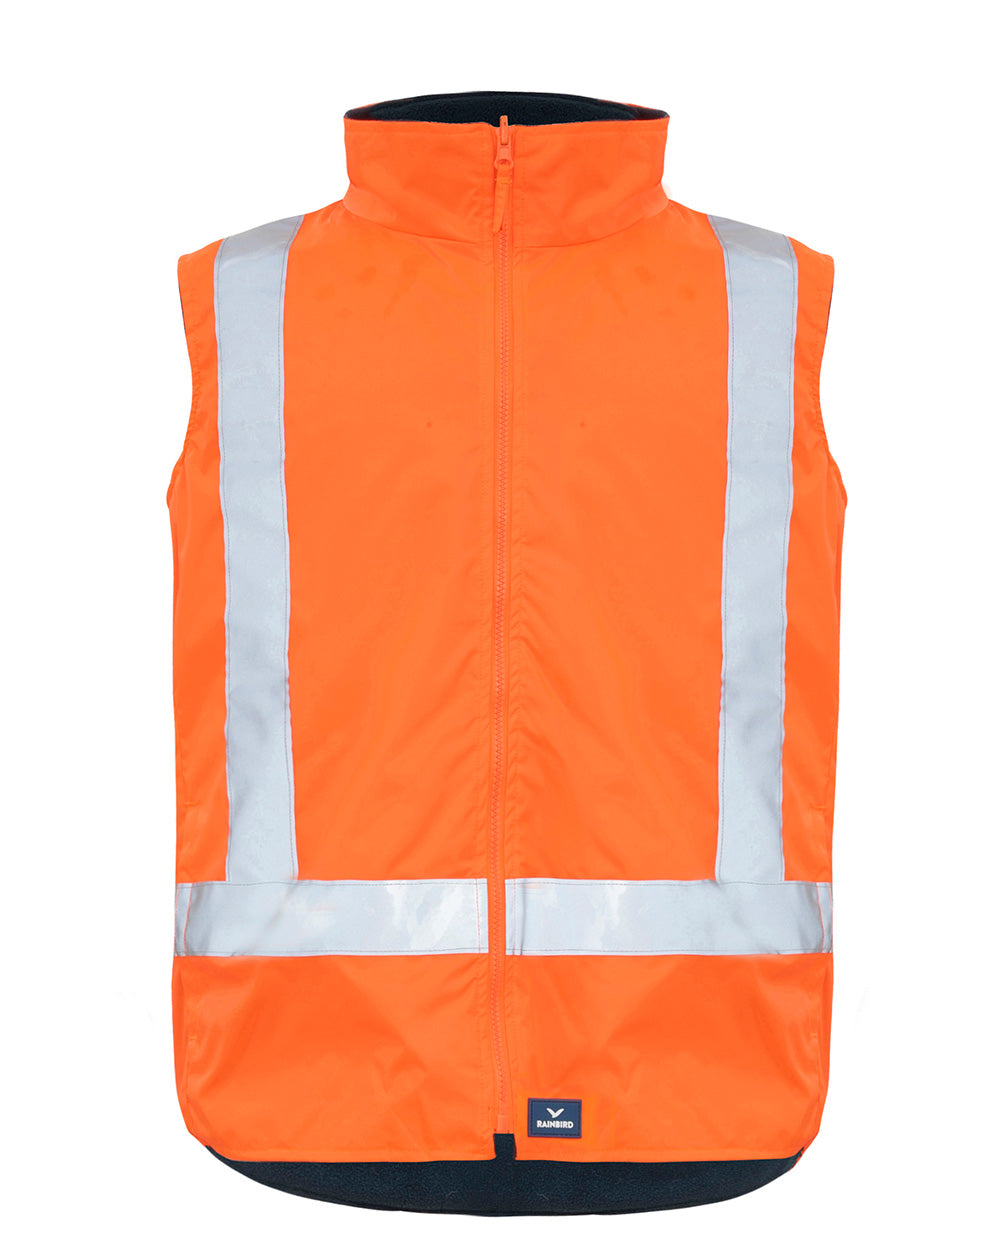 Healy 4-in-1 Jacket & Vest in Fluoro Orange & Navy